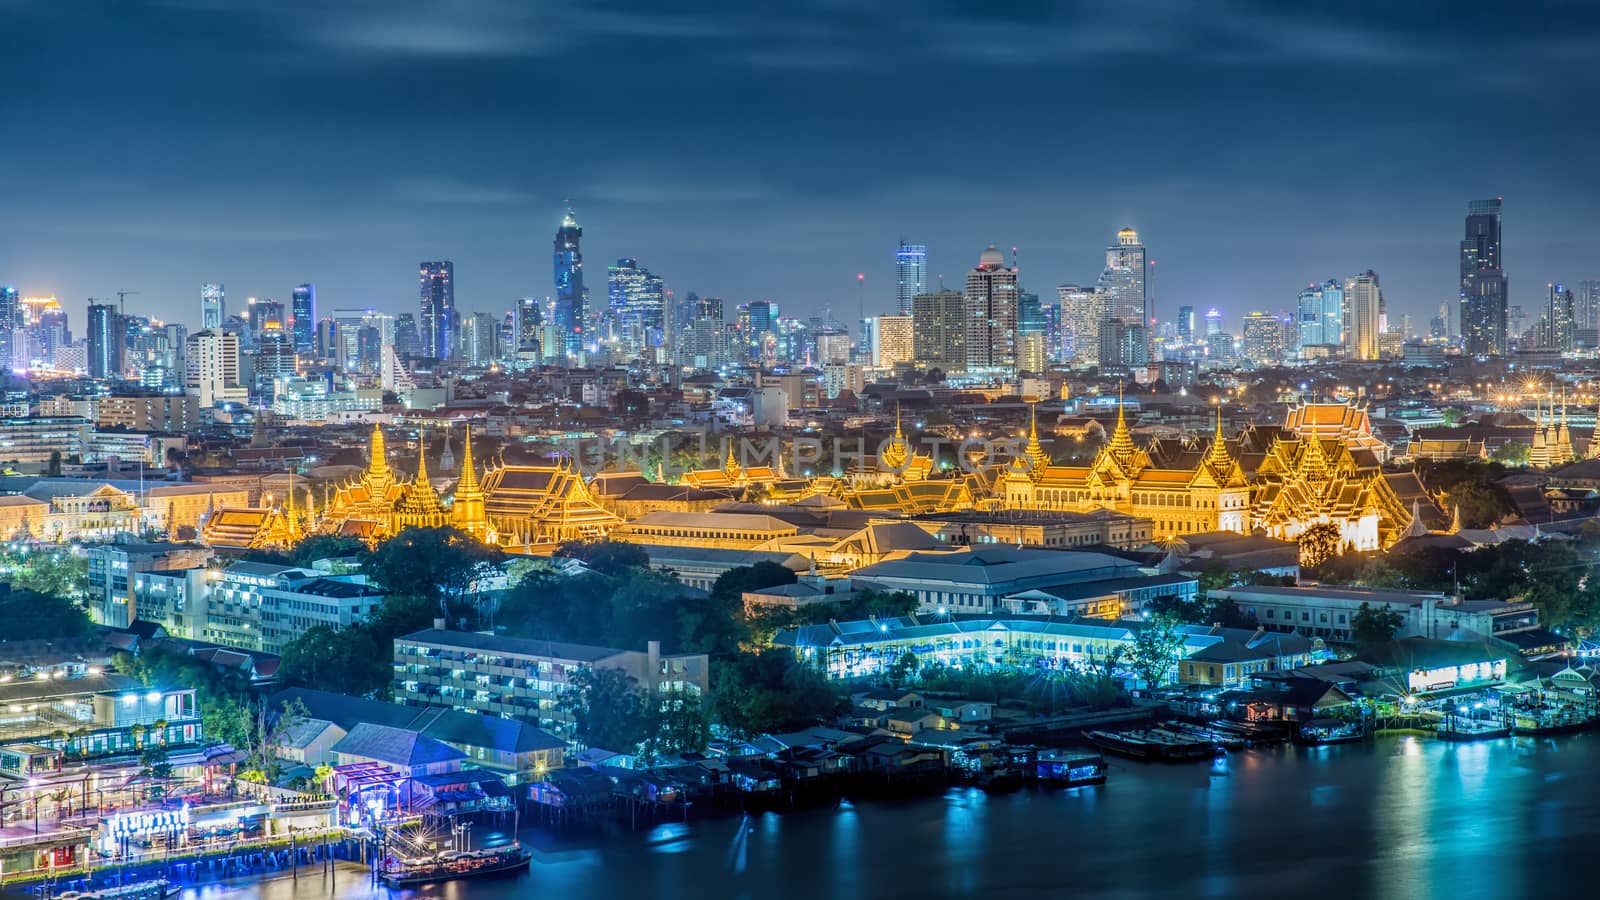 Grand palace at twilight in Bangkok, Thailand by chanwity